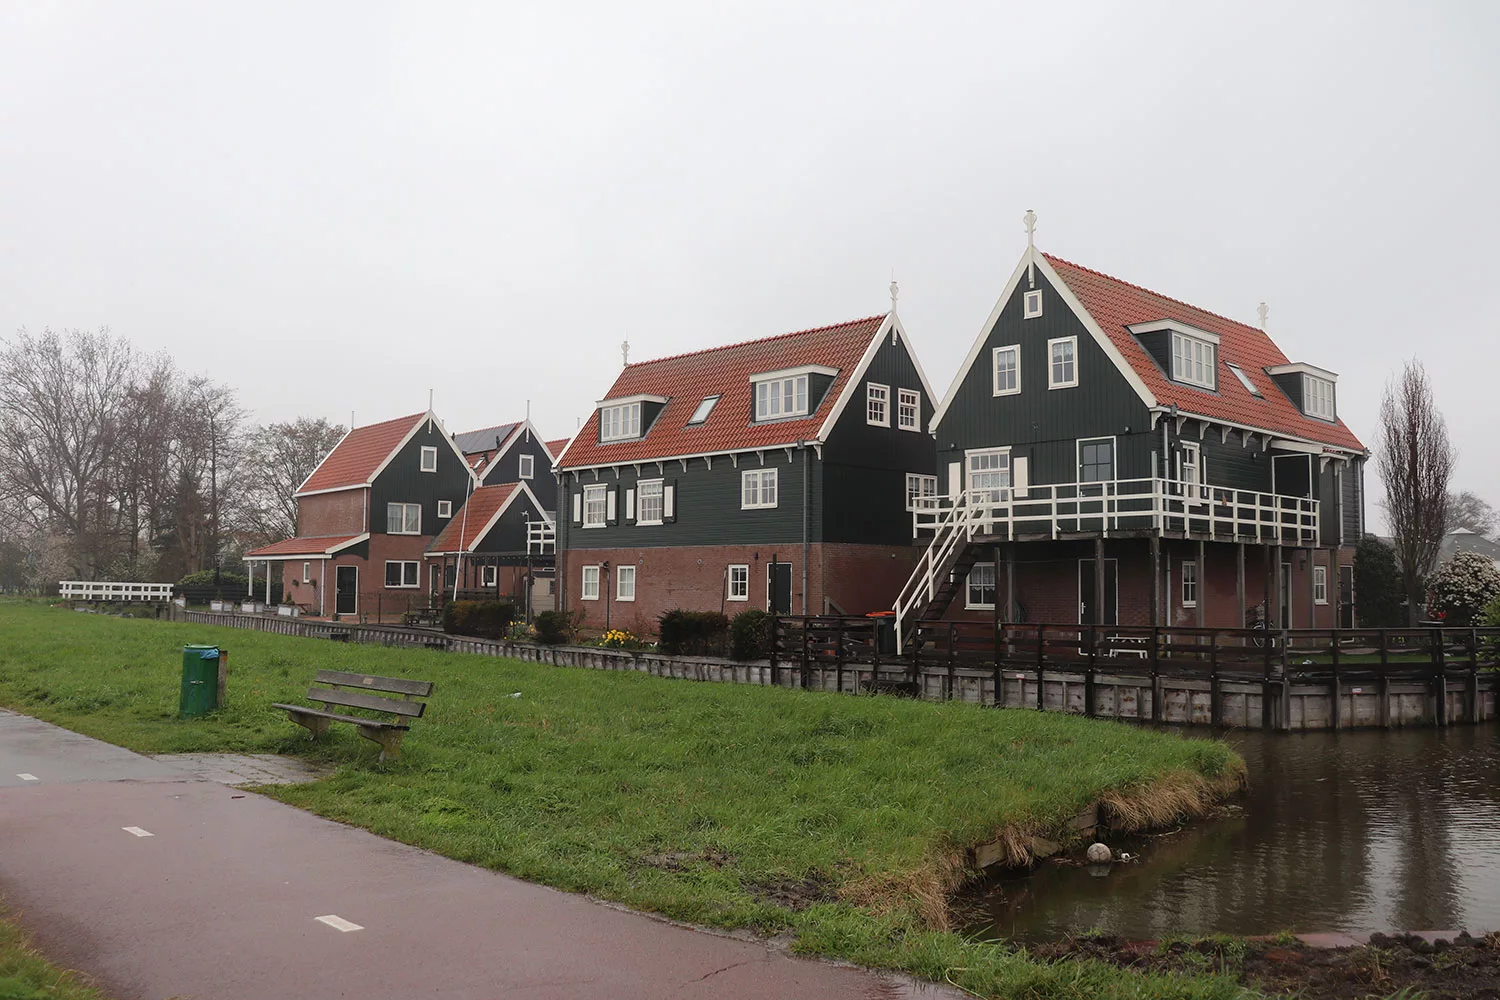 Marken, the Netherlands